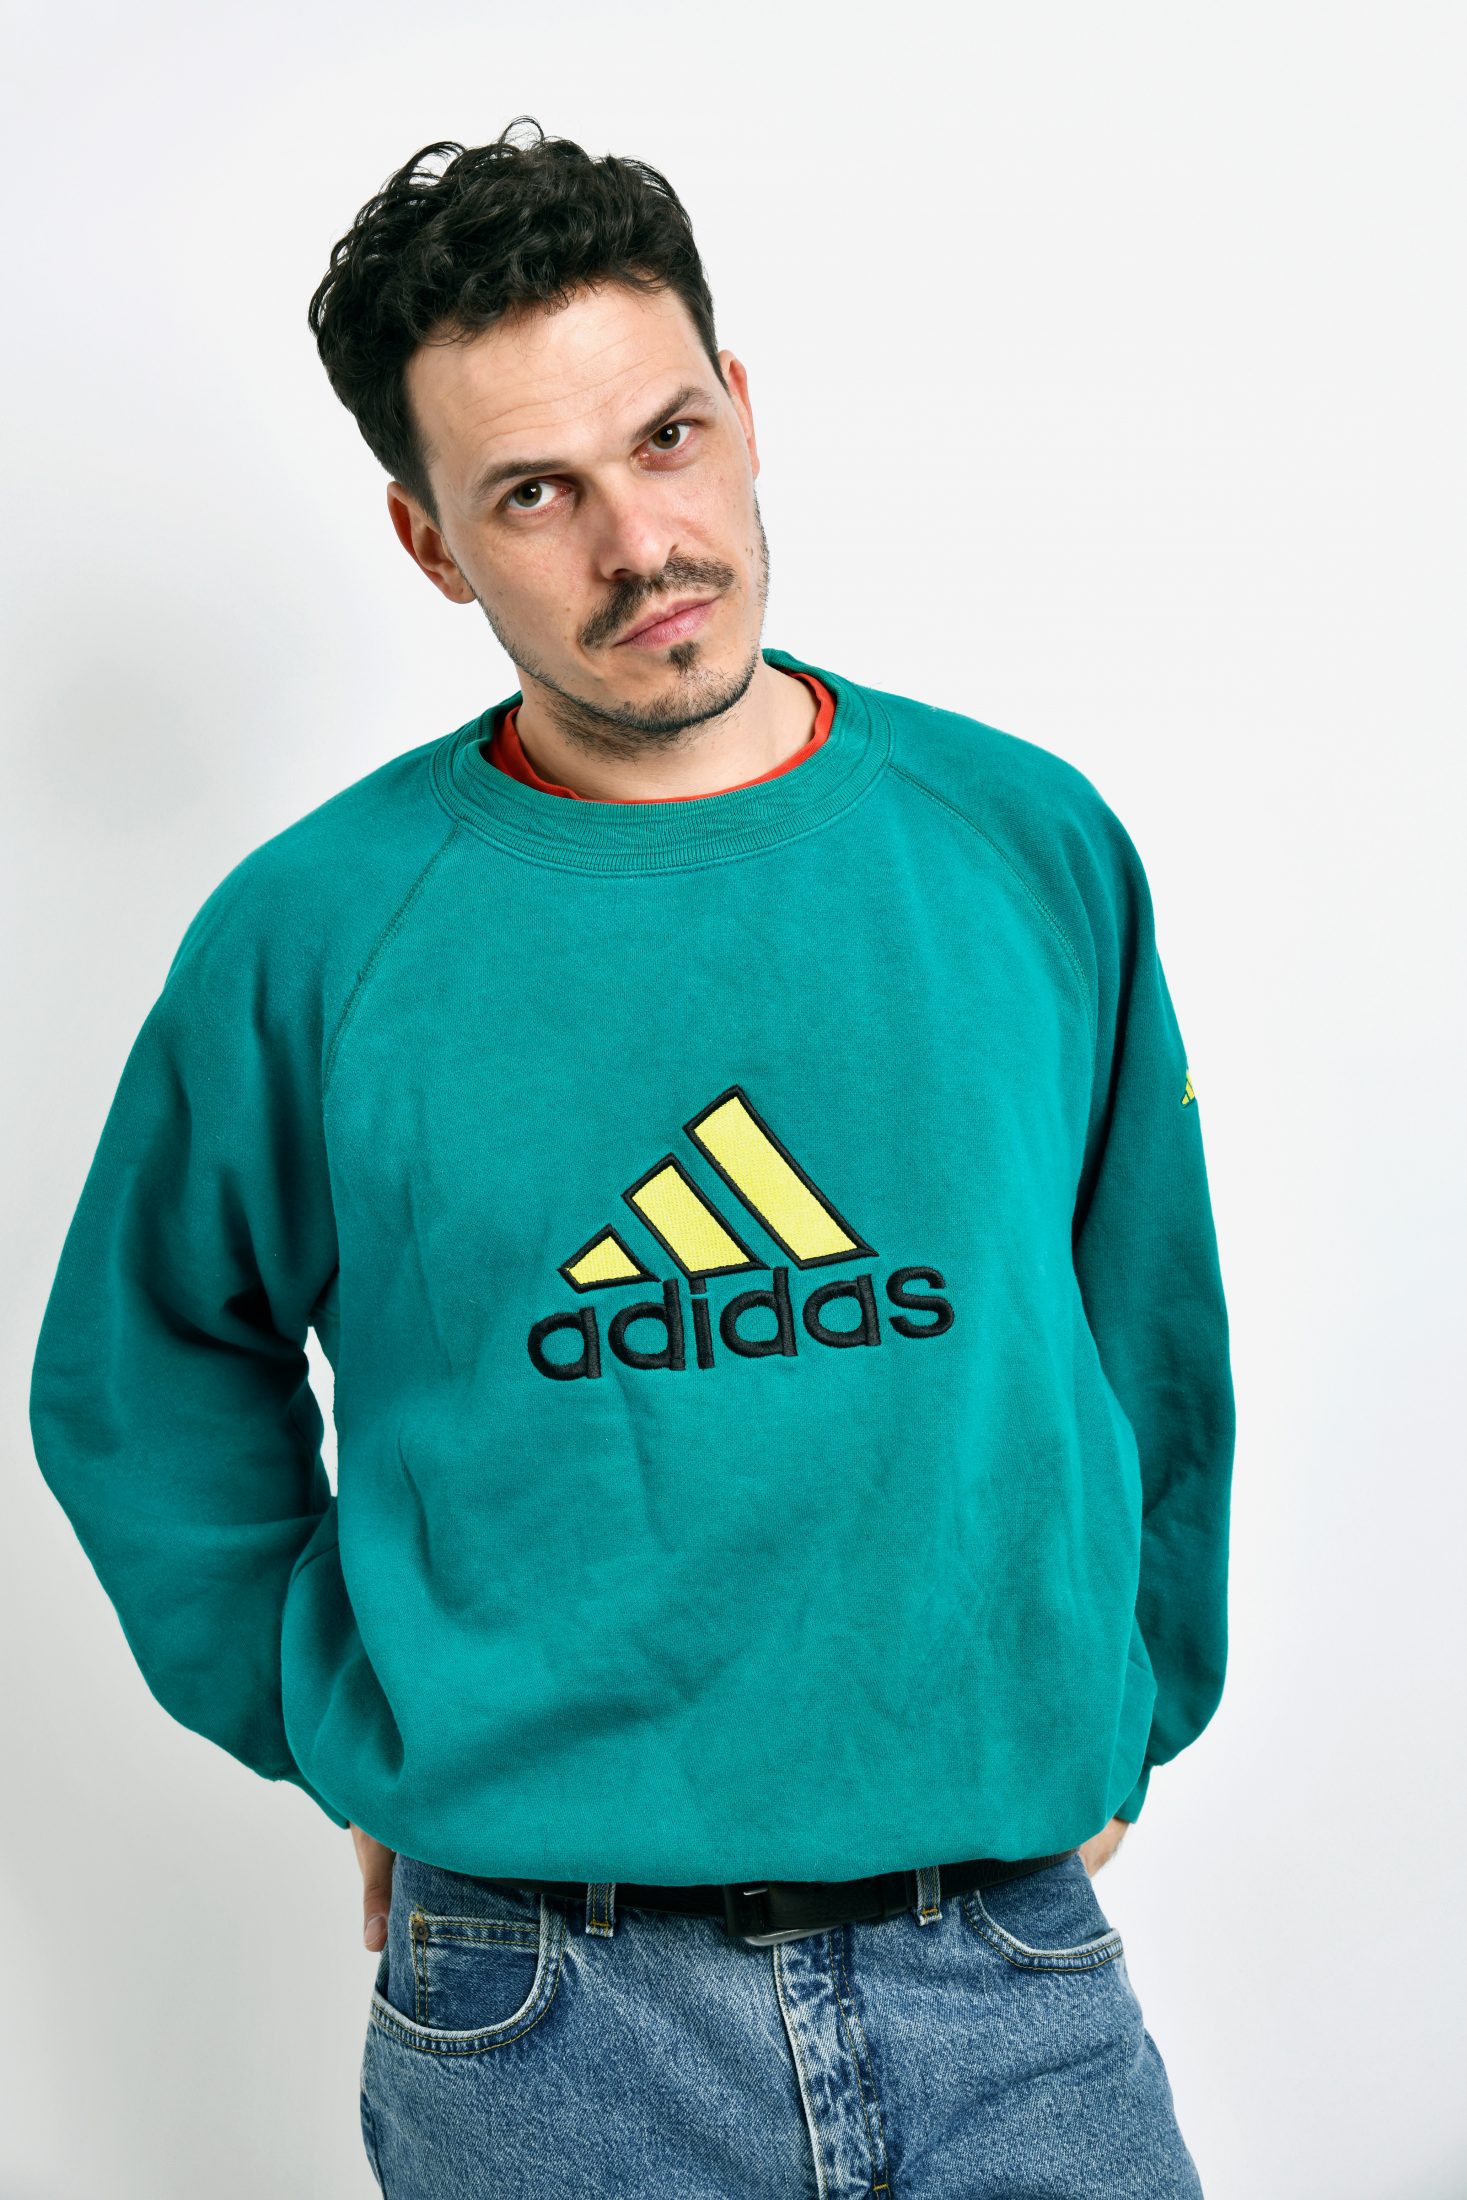 Marco Polo Læsbarhed jord Adidas green vintage sweatshirt men | Vintage Adidas sweatshirt online